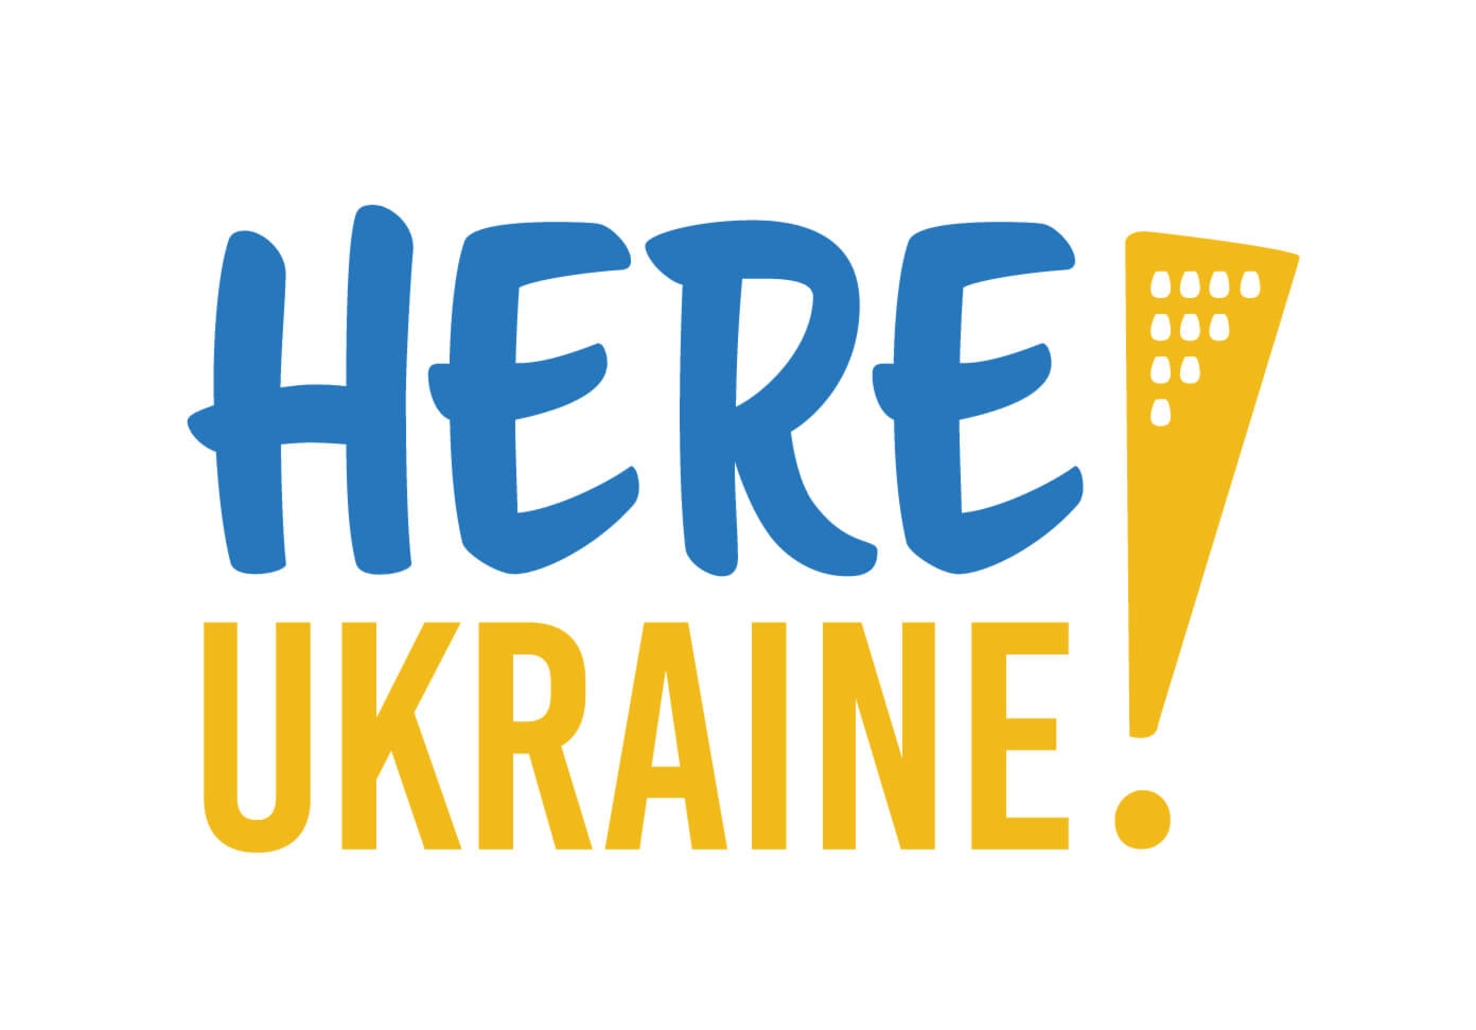 Here Ukraine logo